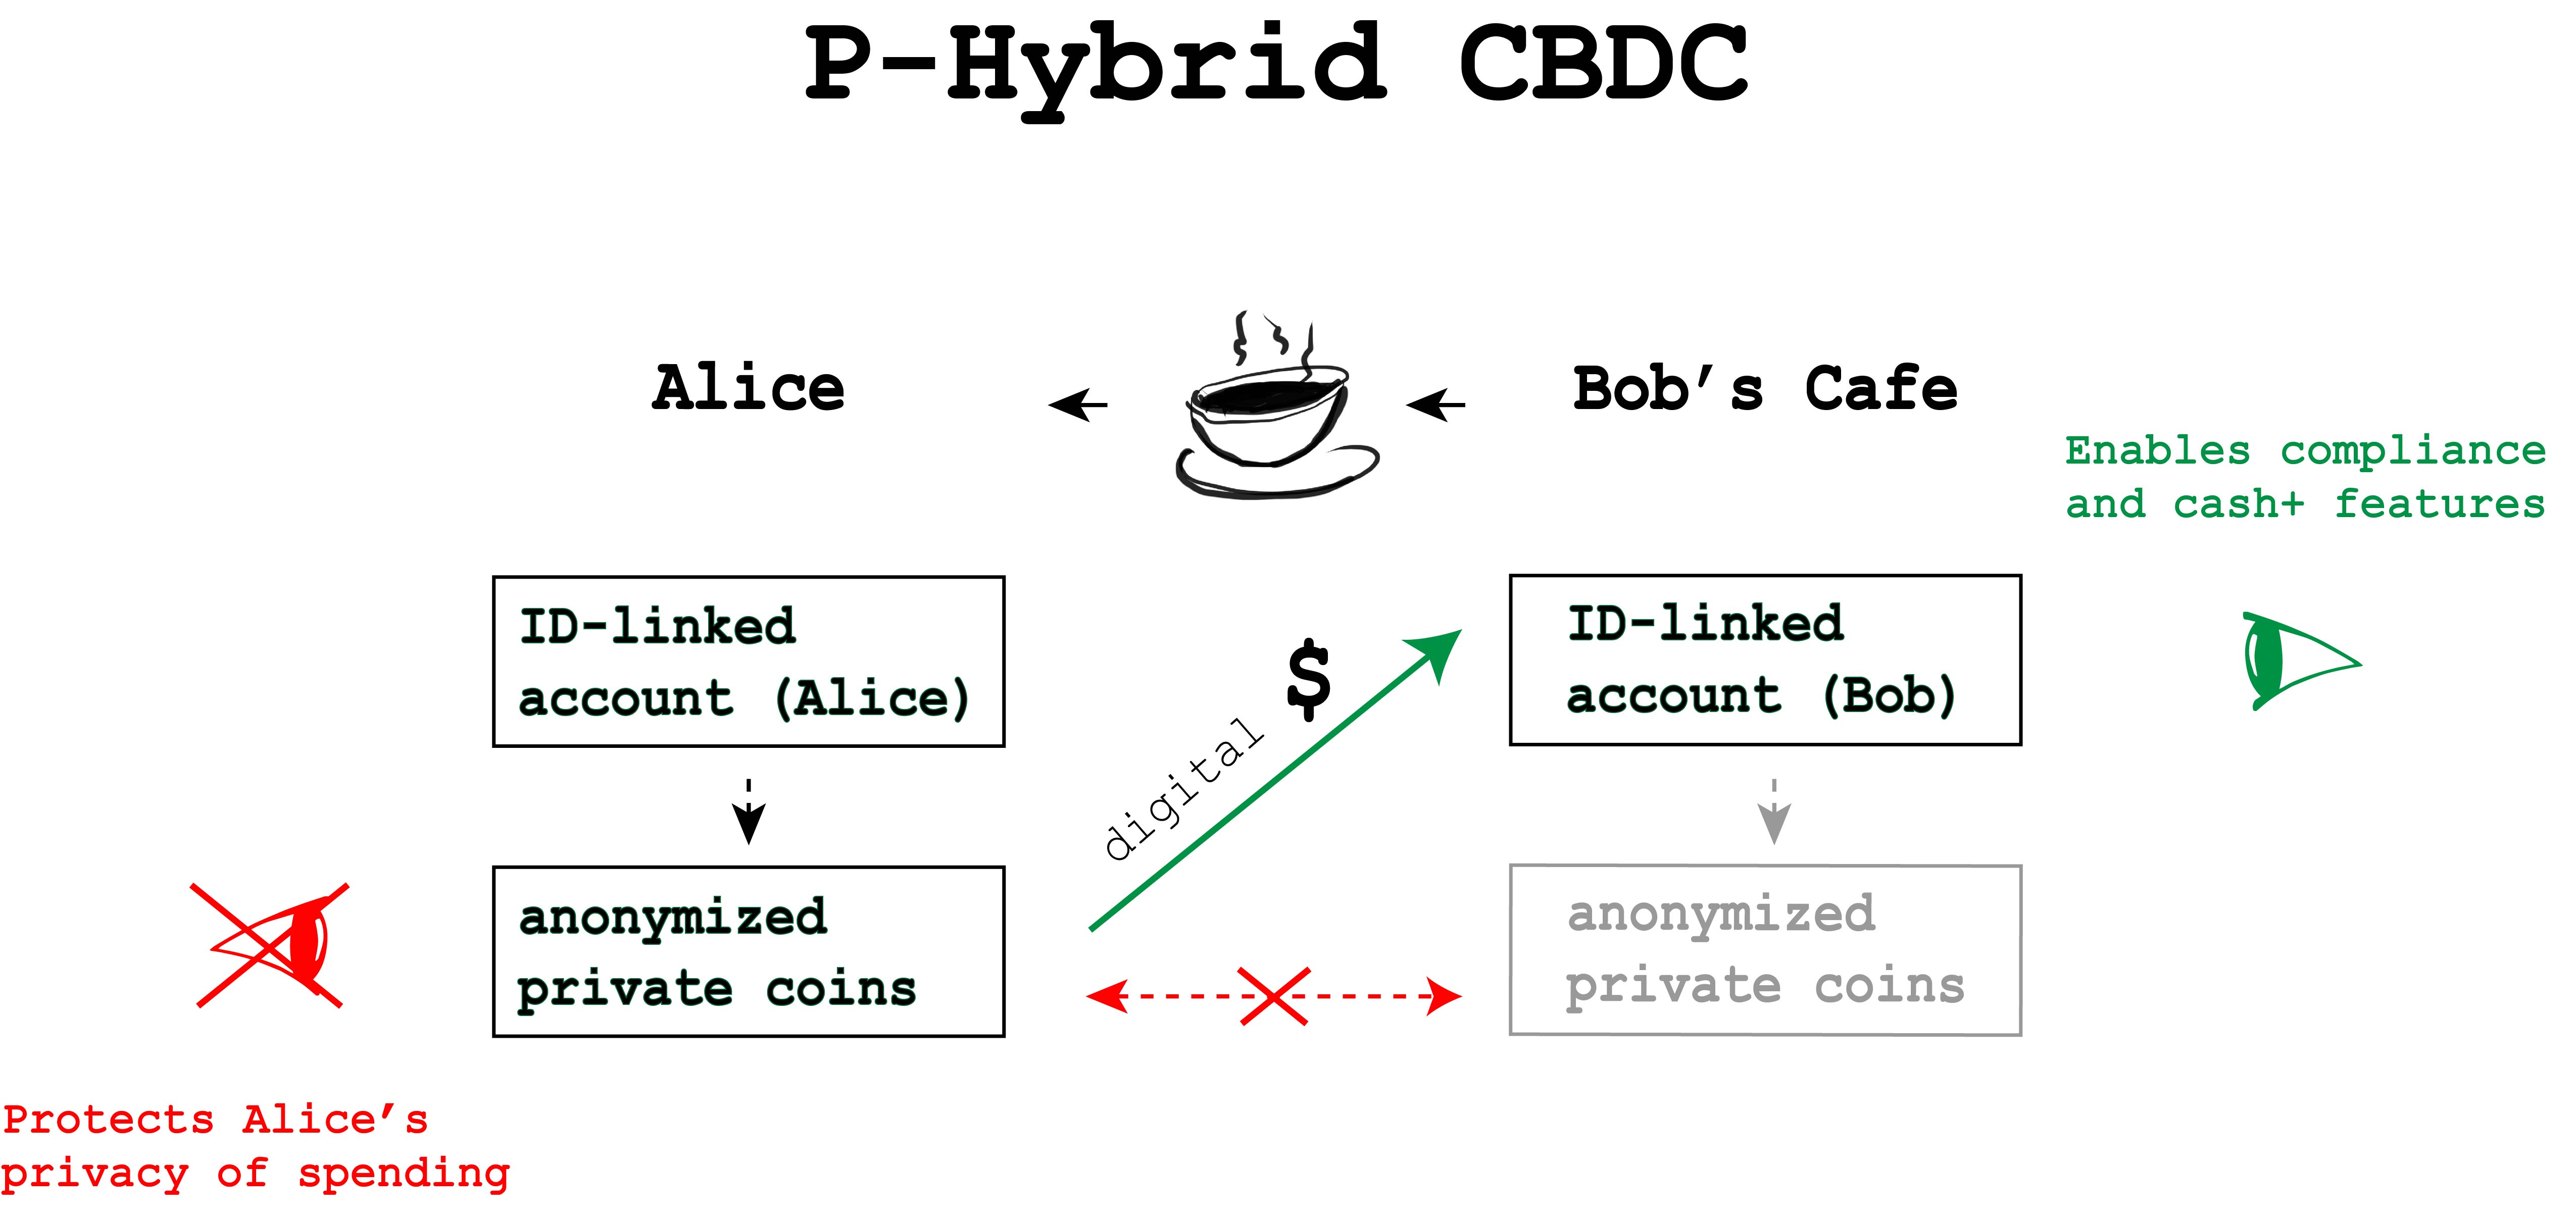 Visualization detailing Privacy-Hybrid CBDC